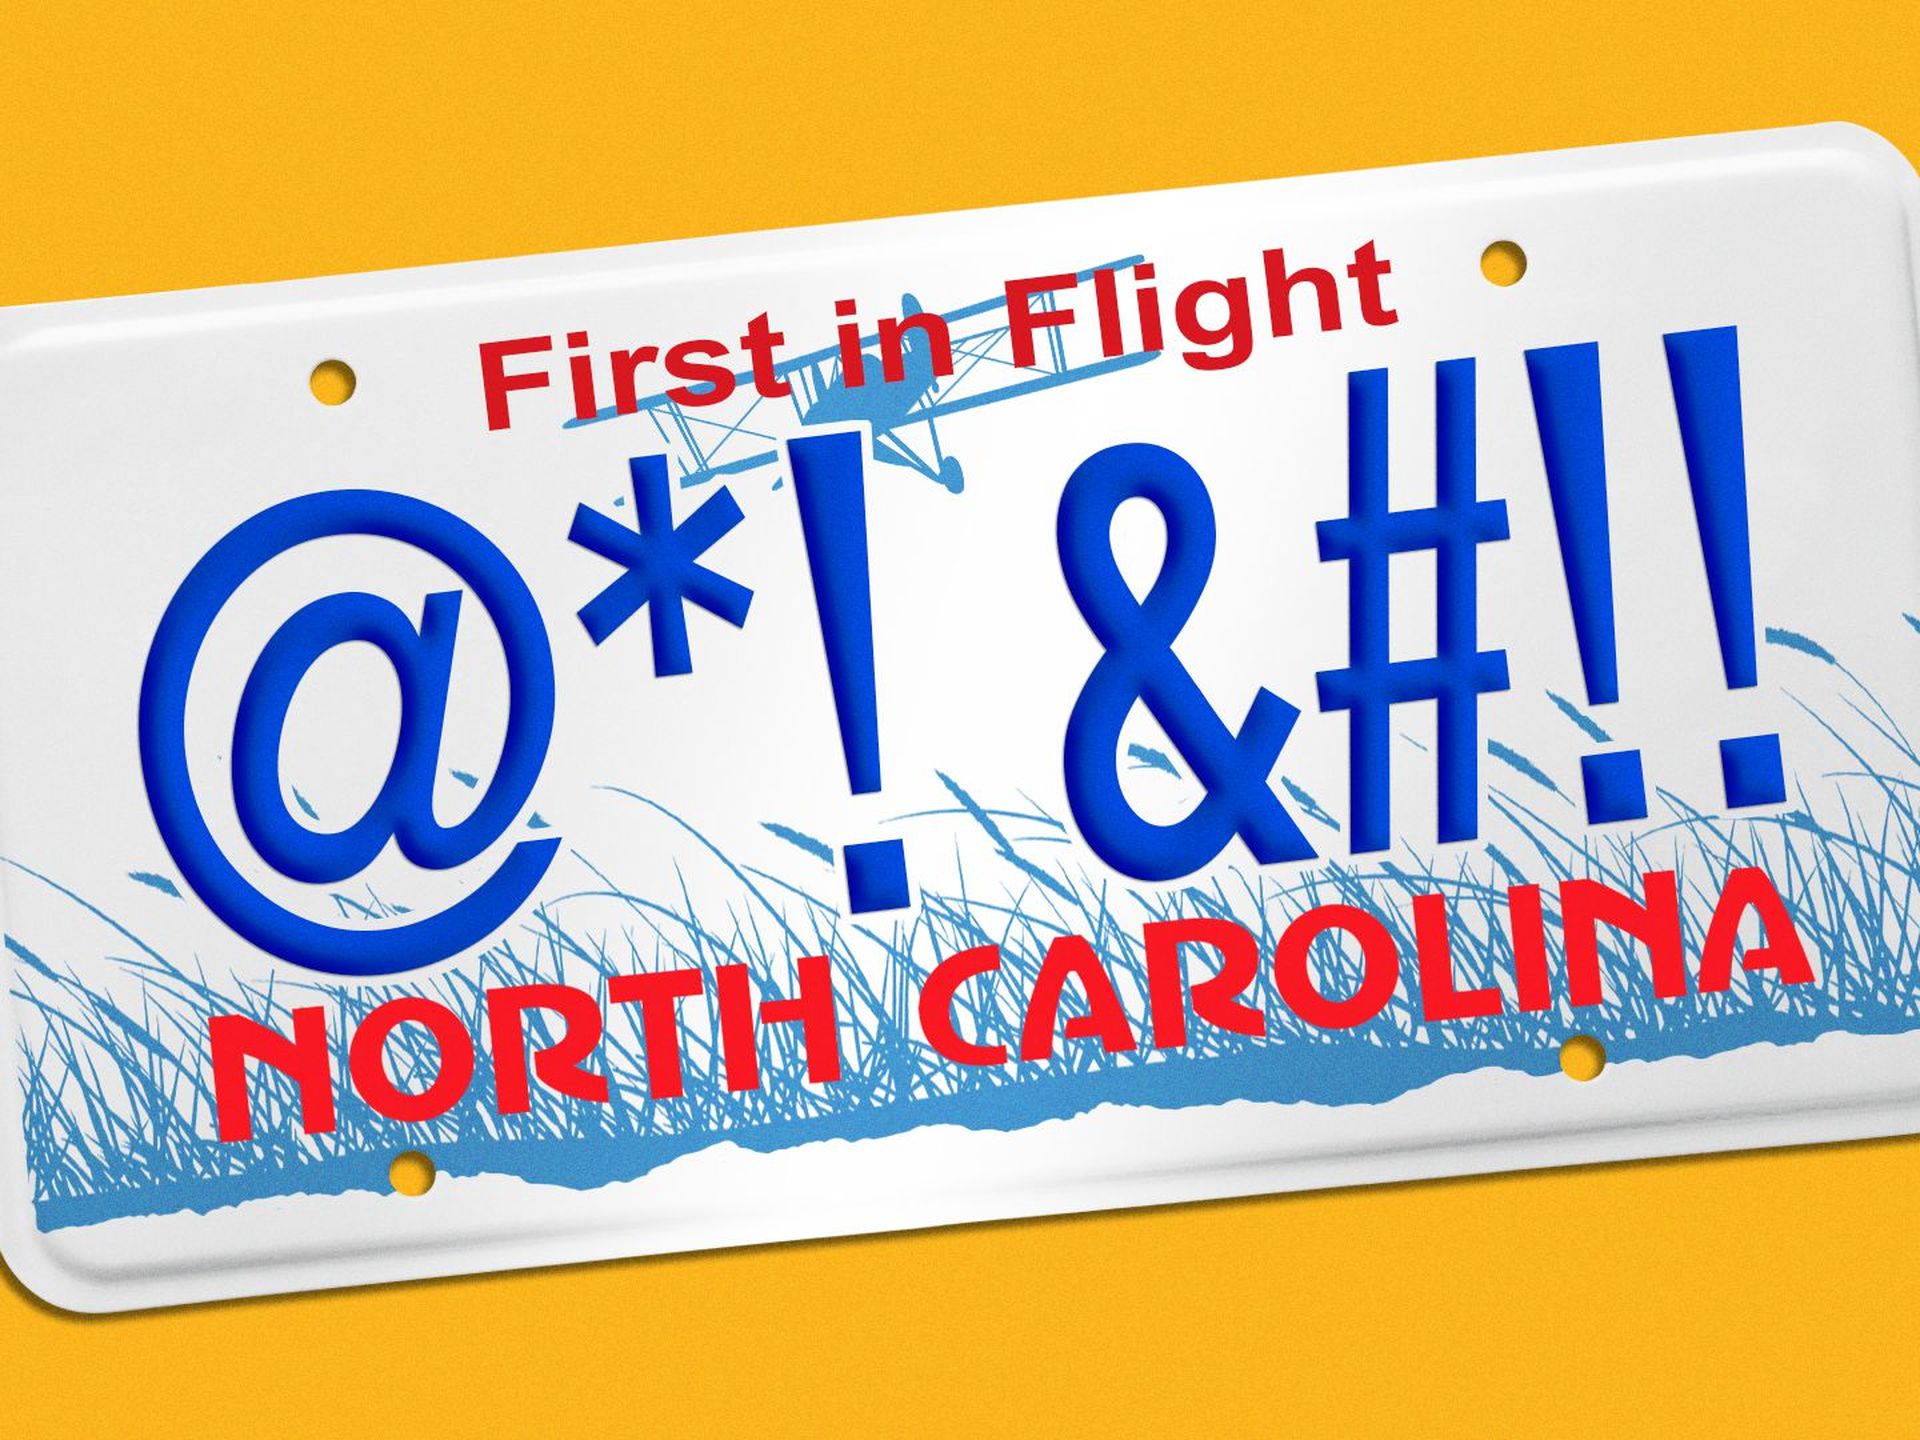 NORTH CAROLINA License Plate Plasma Cut Map Sign, FIRST IN FLIGHT